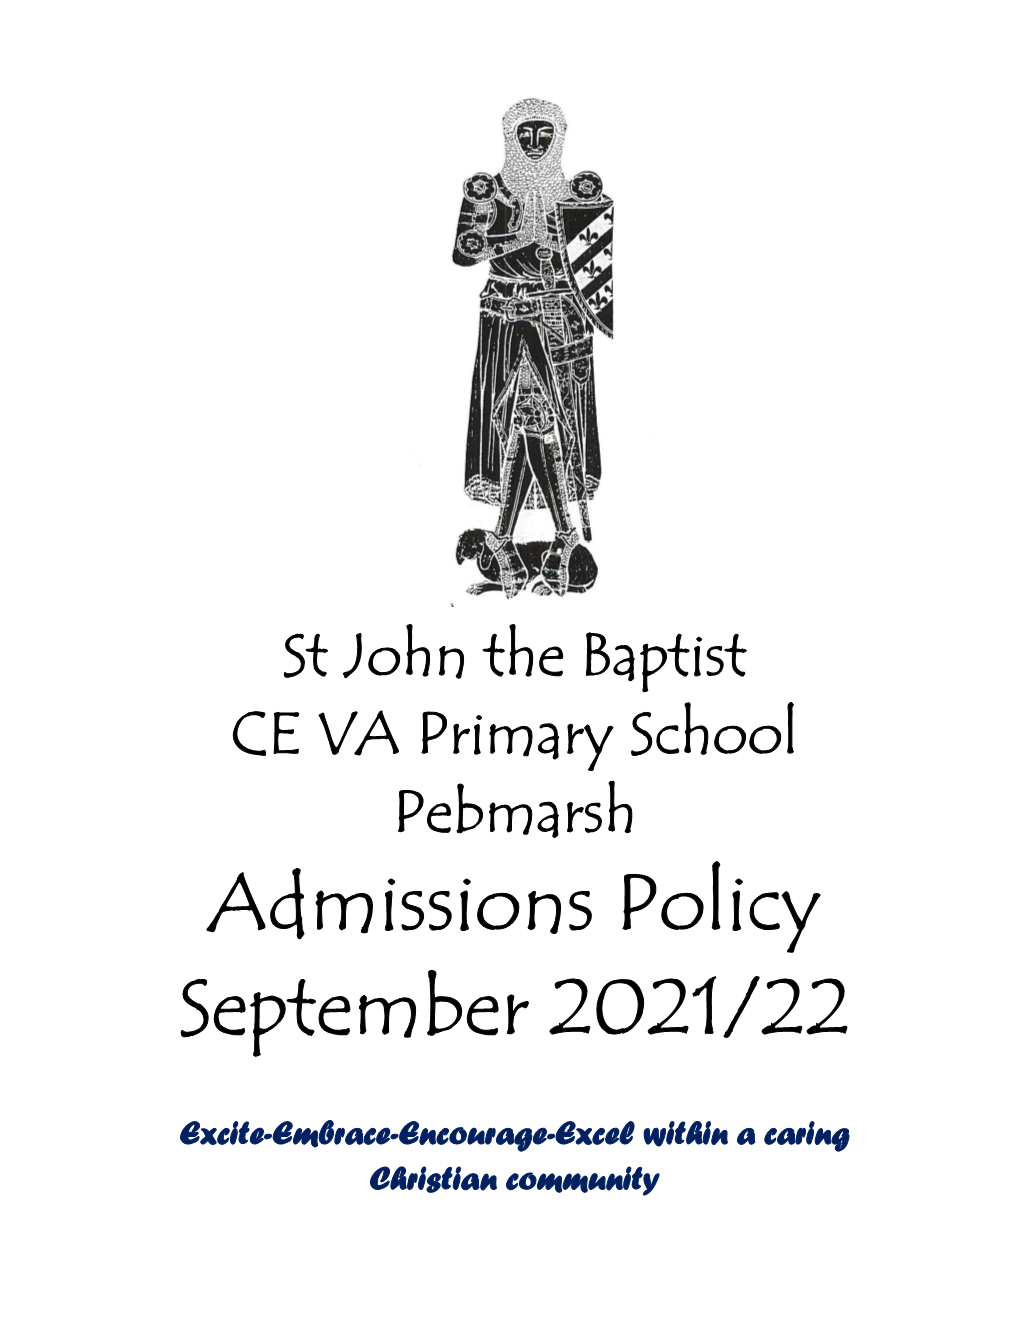 St John the Baptist CE VA Primary School Pebmarsh Admissions Policy September 2021/22